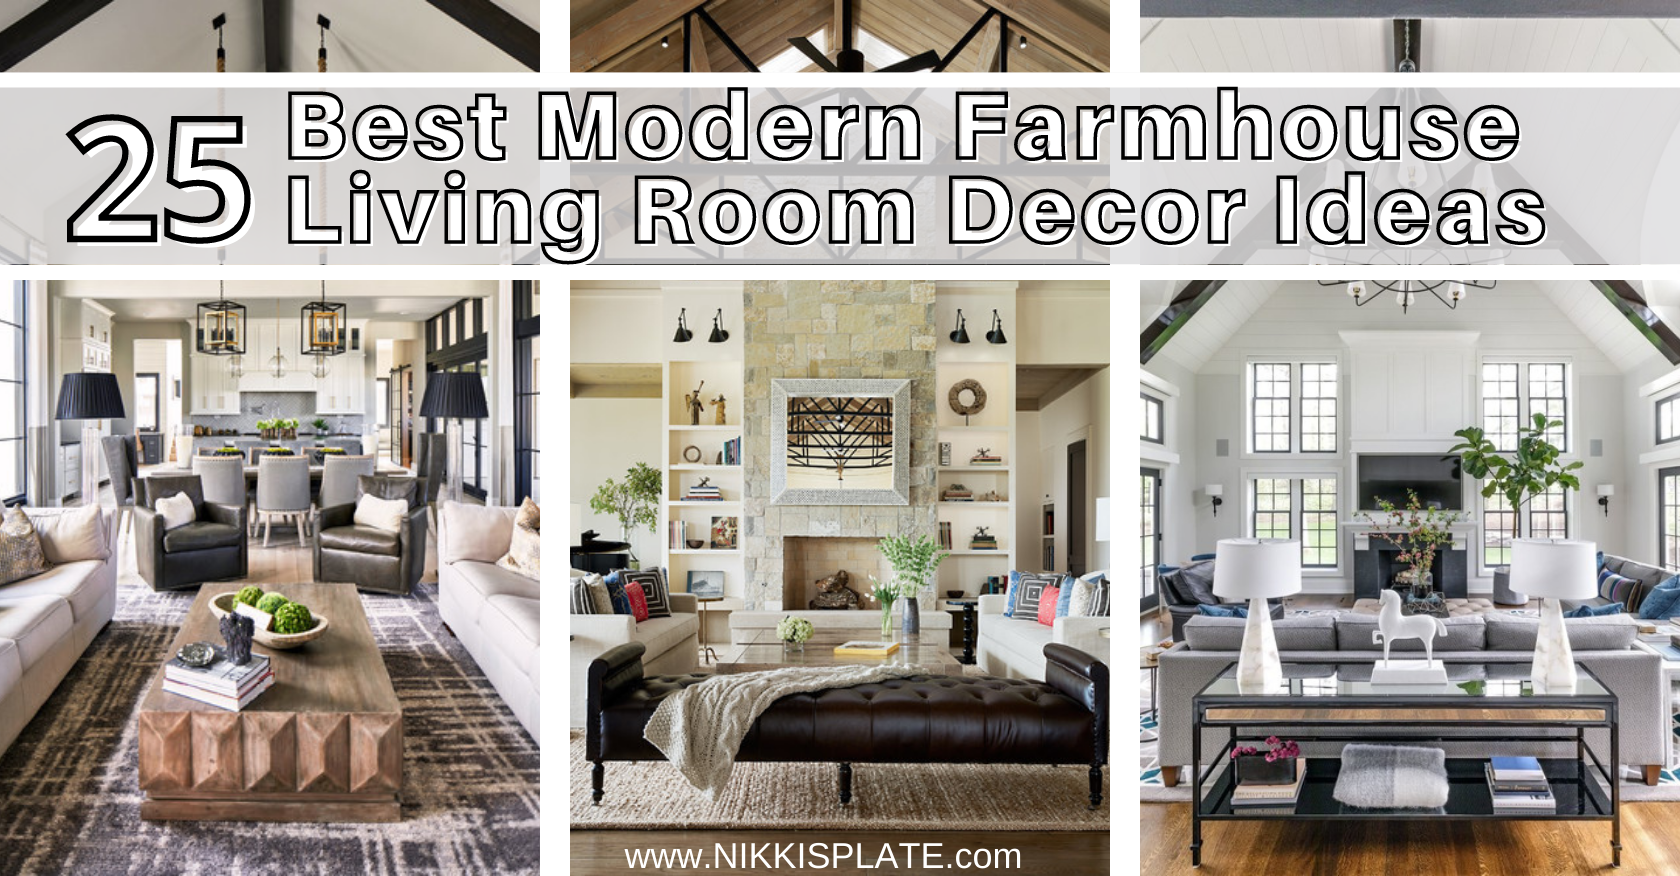 10 Gorgeous Farmhouse Decor Ideas for your Home – Wall Charmers